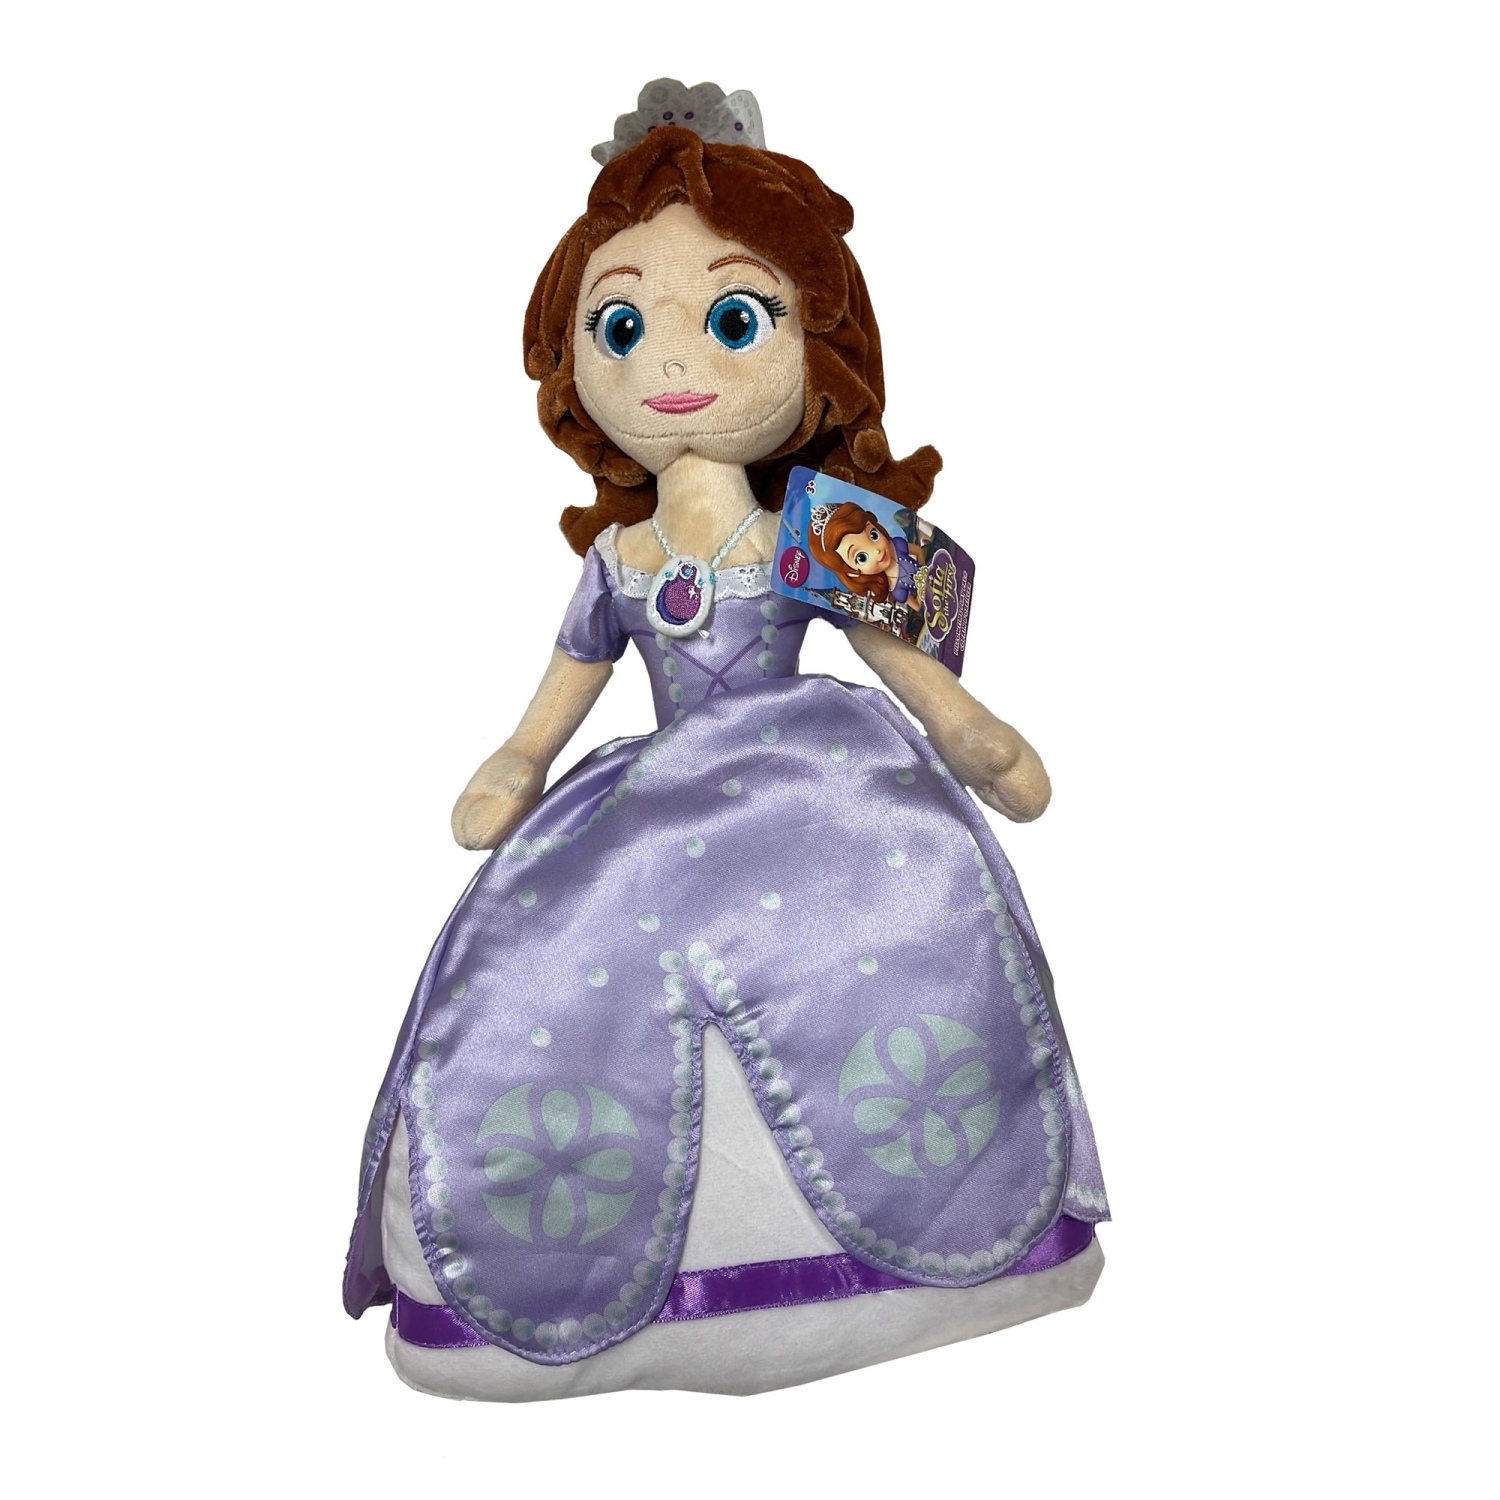 Enchanting Adventures Await with Princess Sofia Plush Toy for Kids - A Huggable Royal Companion!